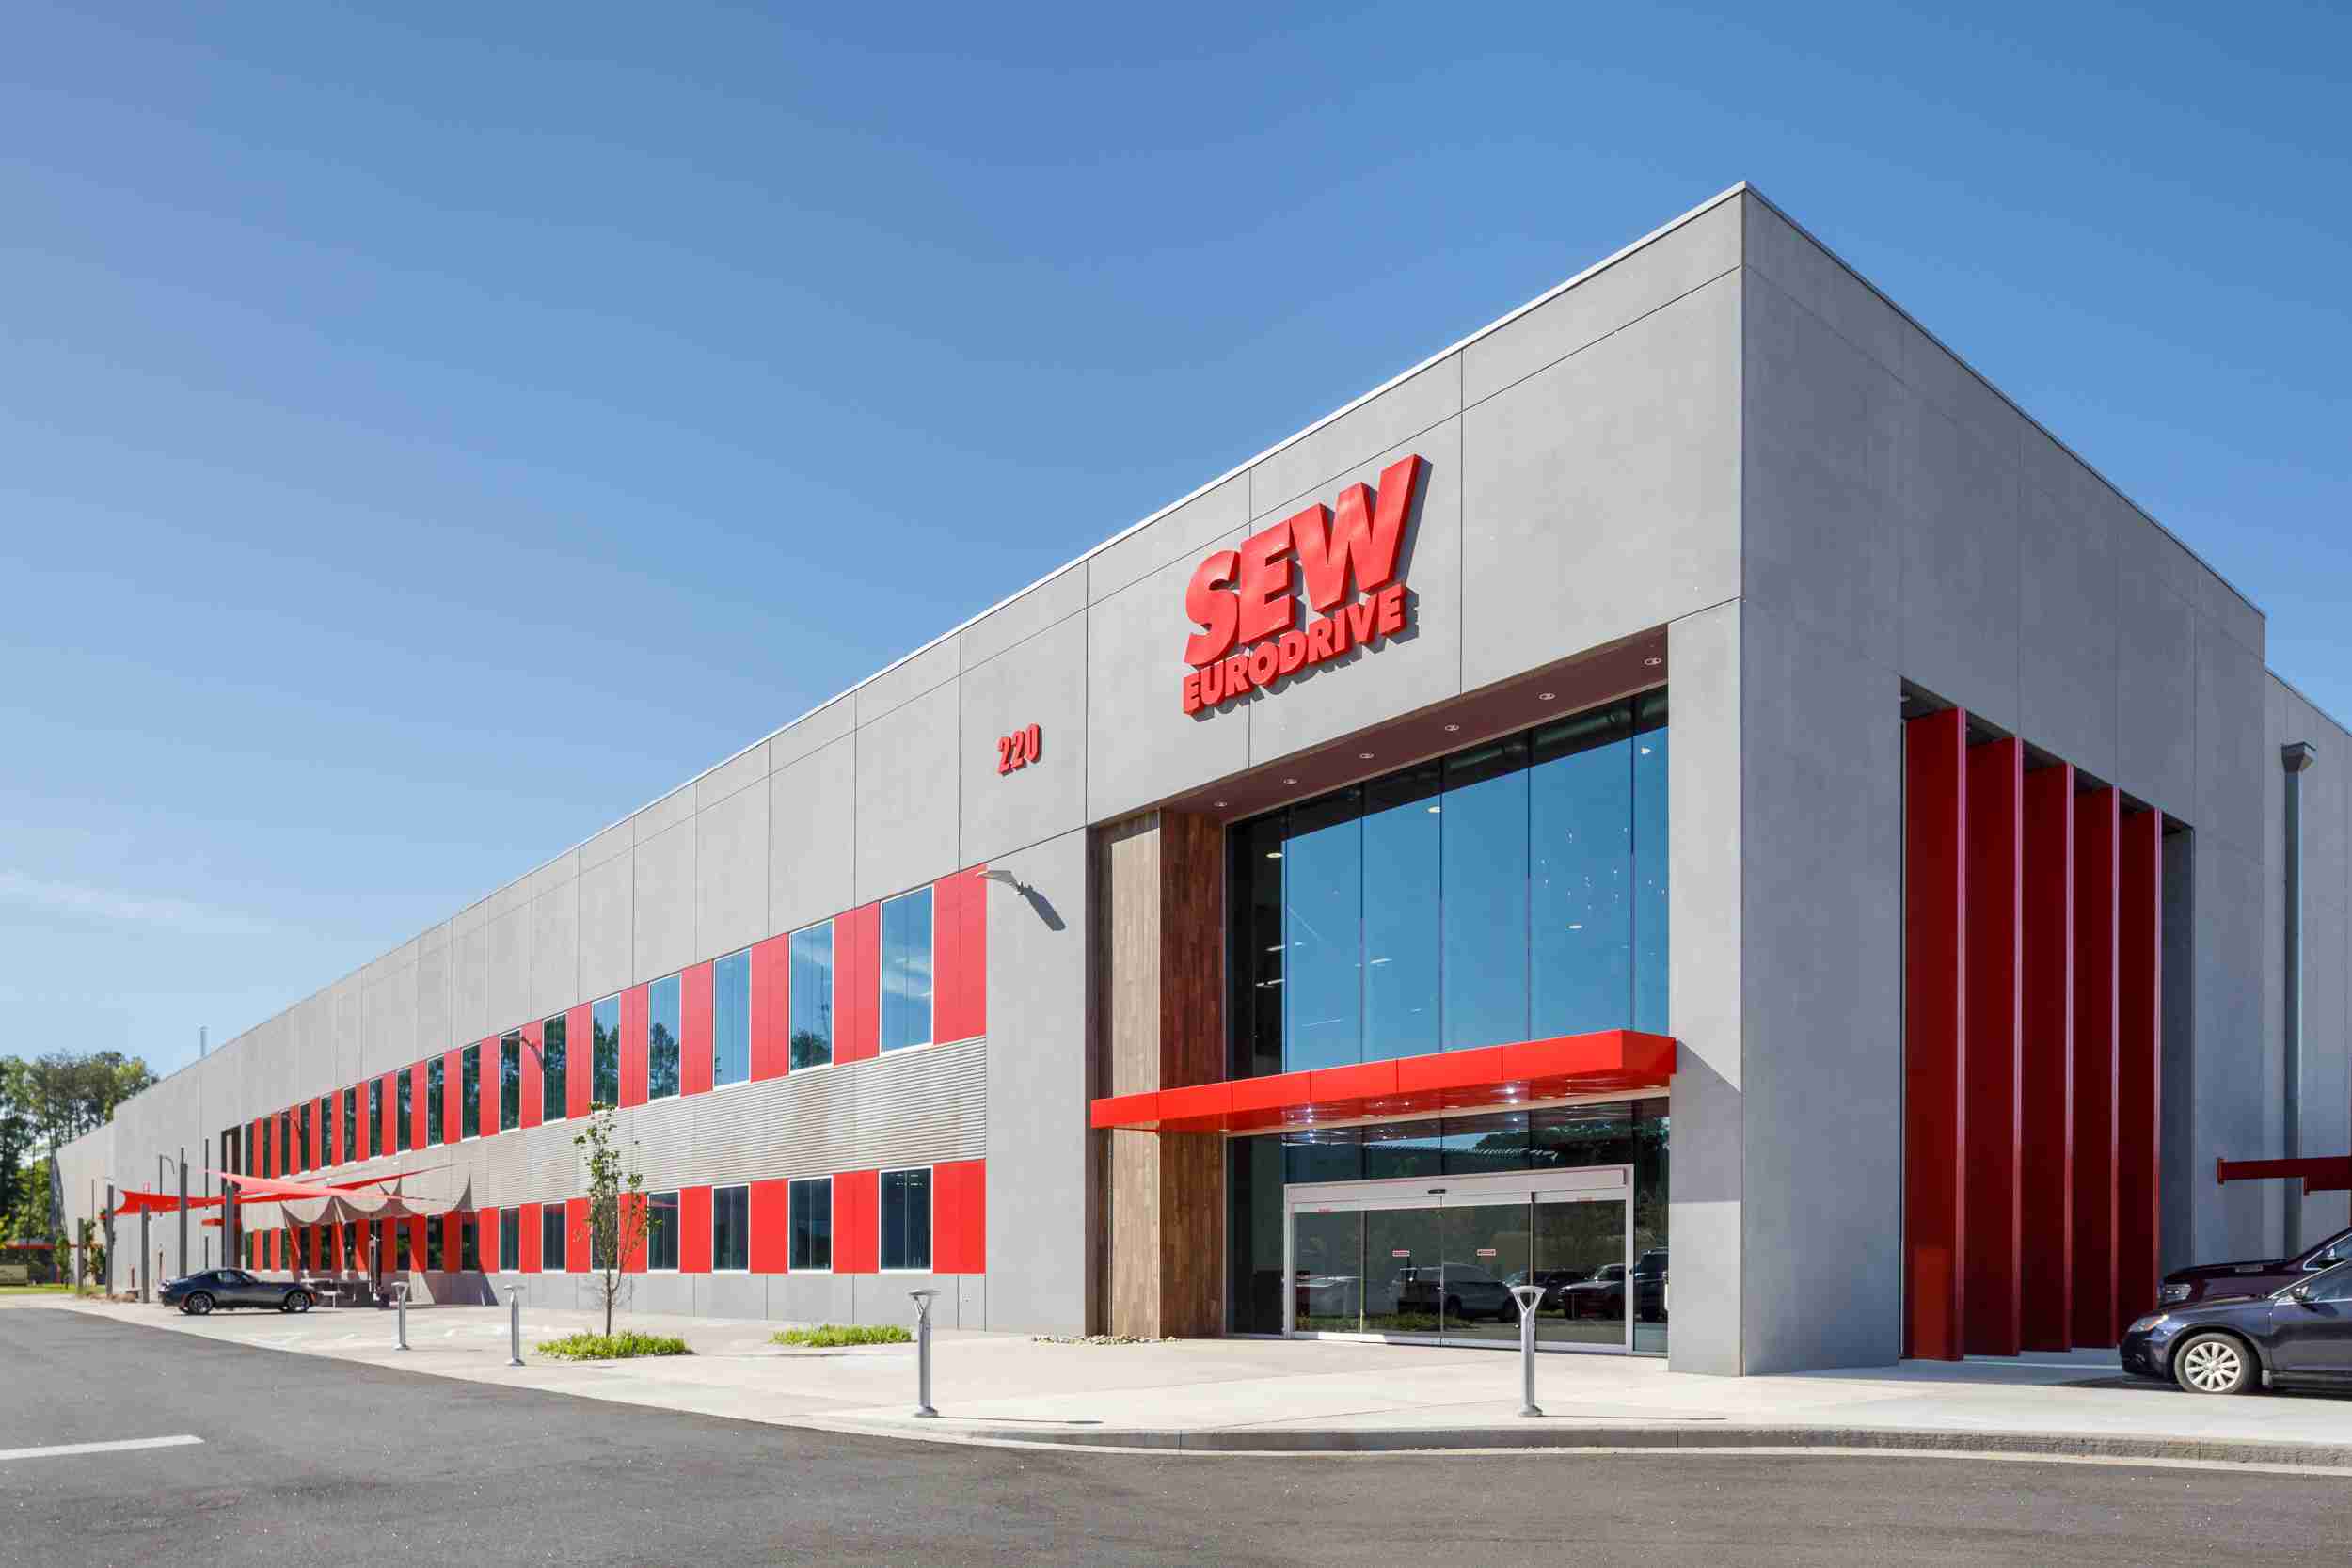 SEW precast Warehouse building in SC